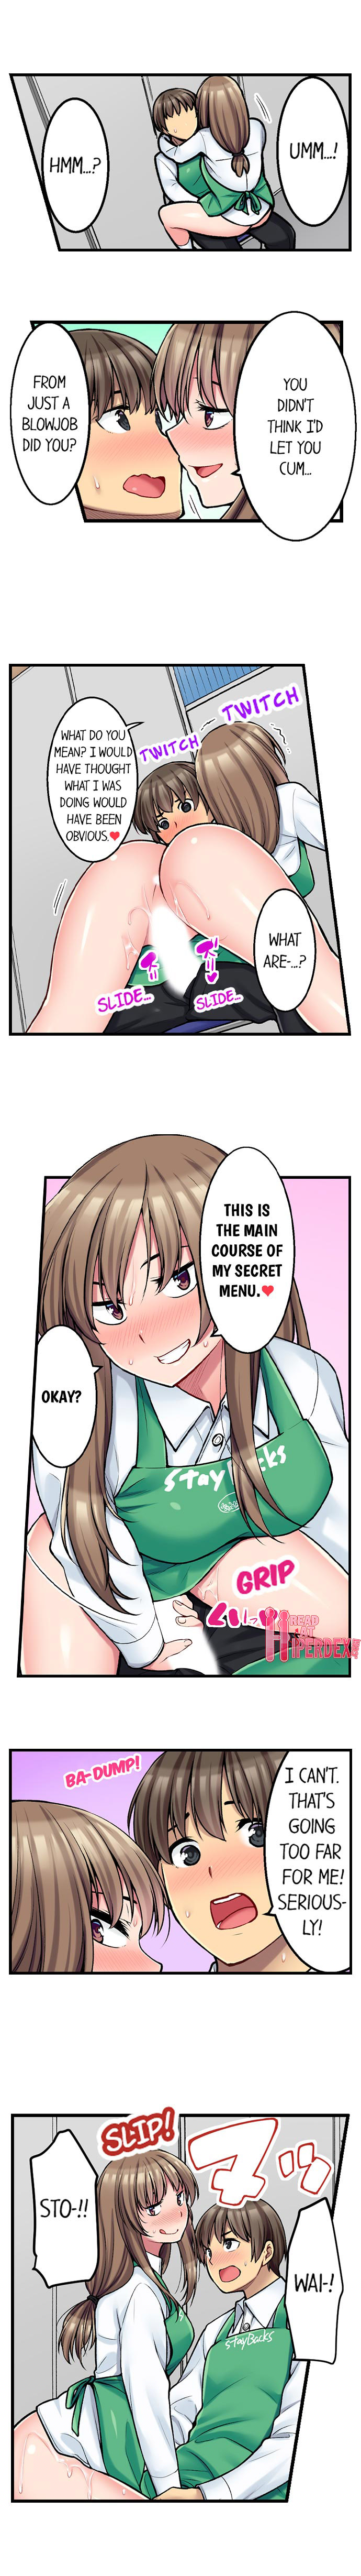 The Coffee Shop’s Secret Menu Item is Sex?! - Chapter 15 Page 2